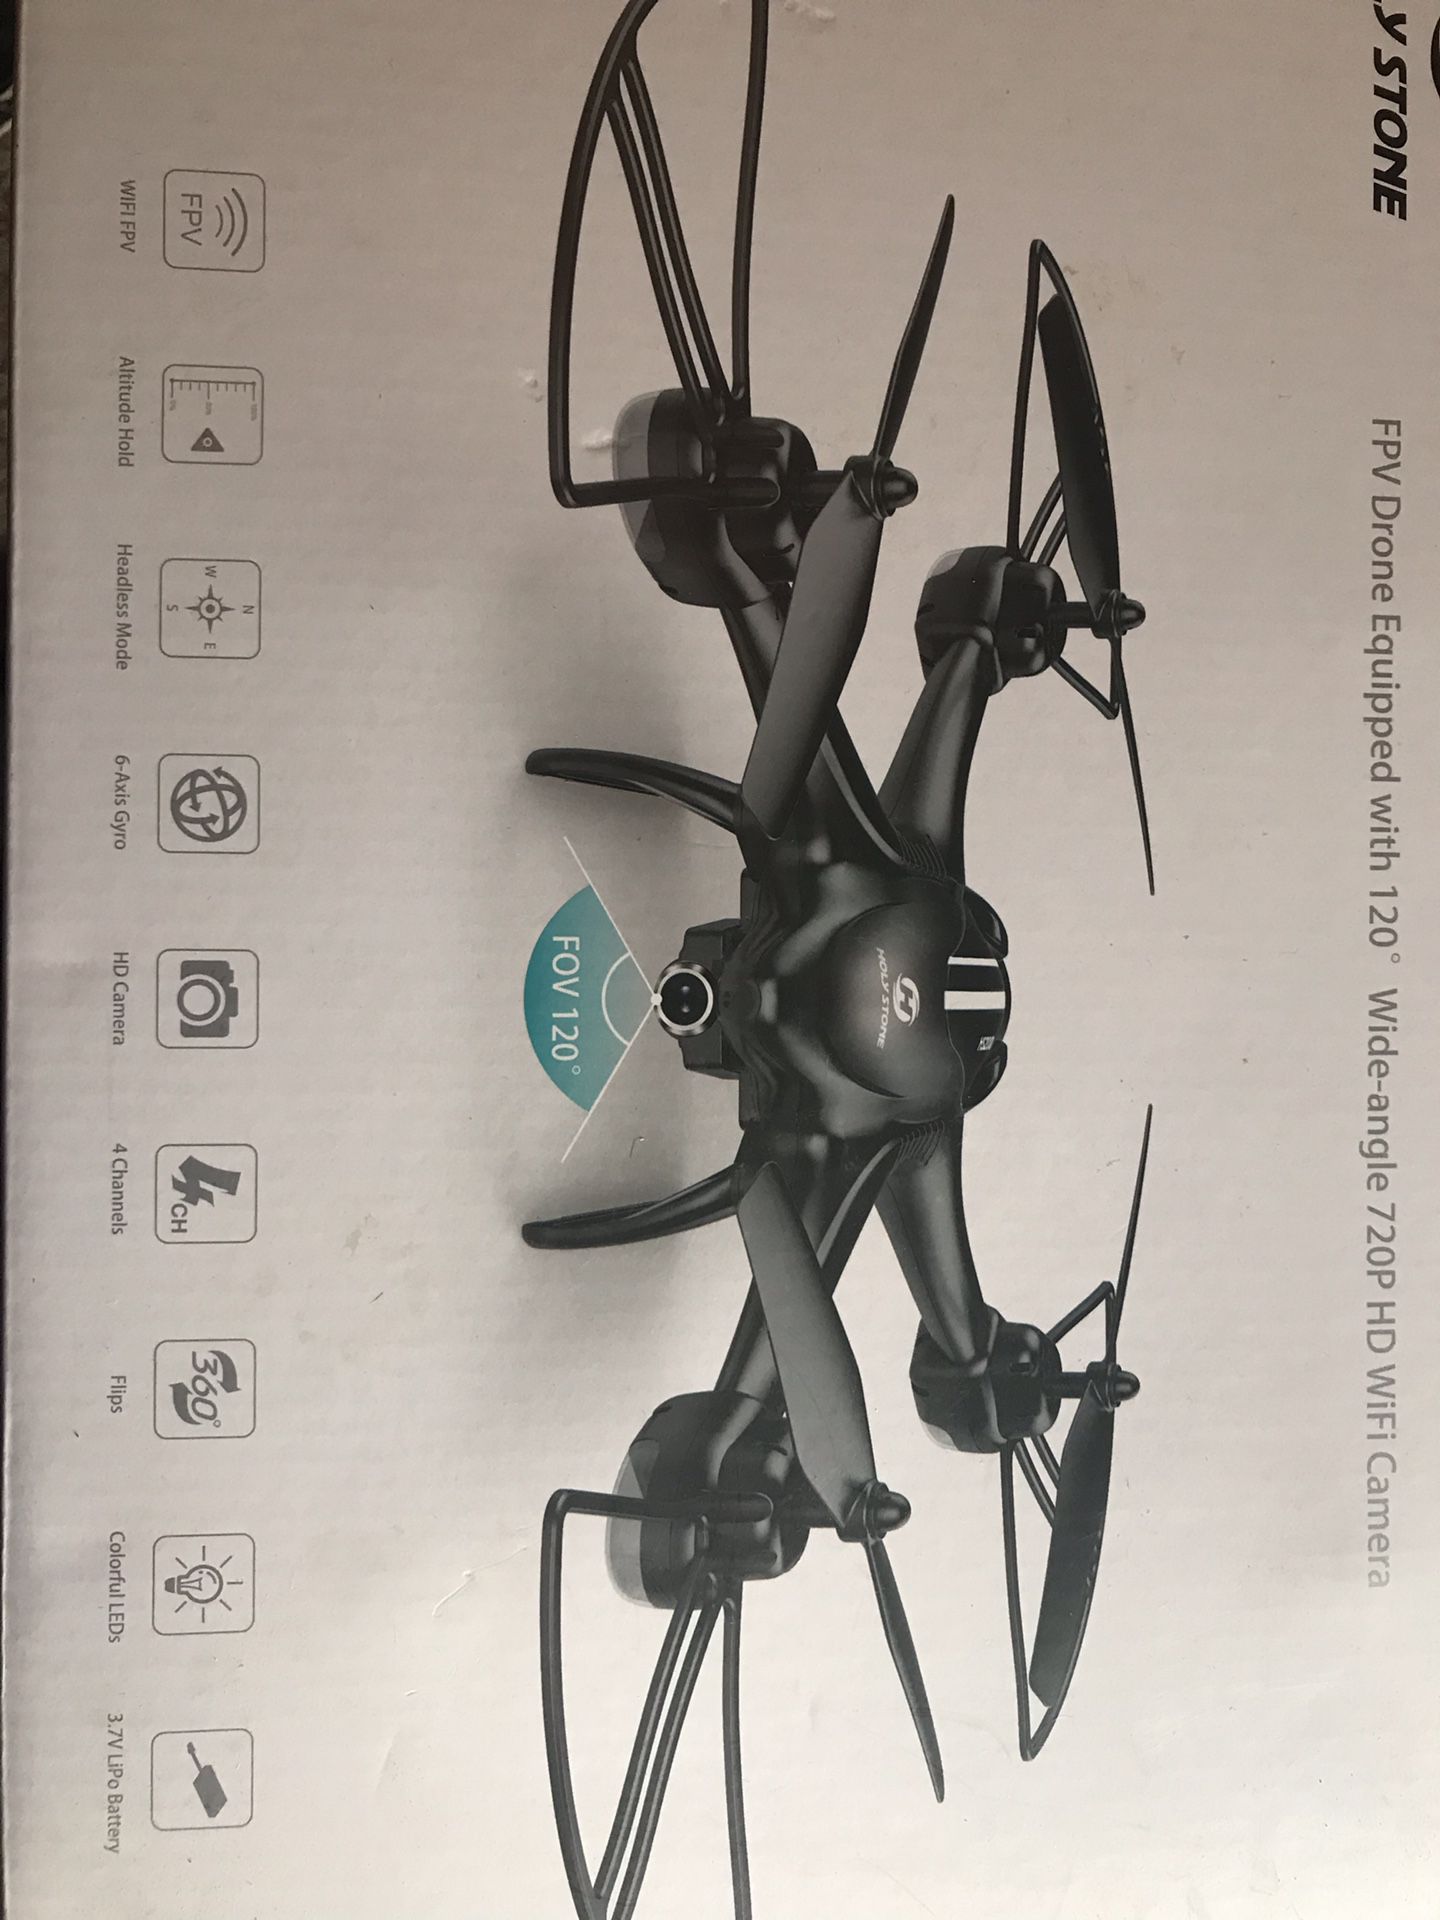 Brand new drone Negotiable price